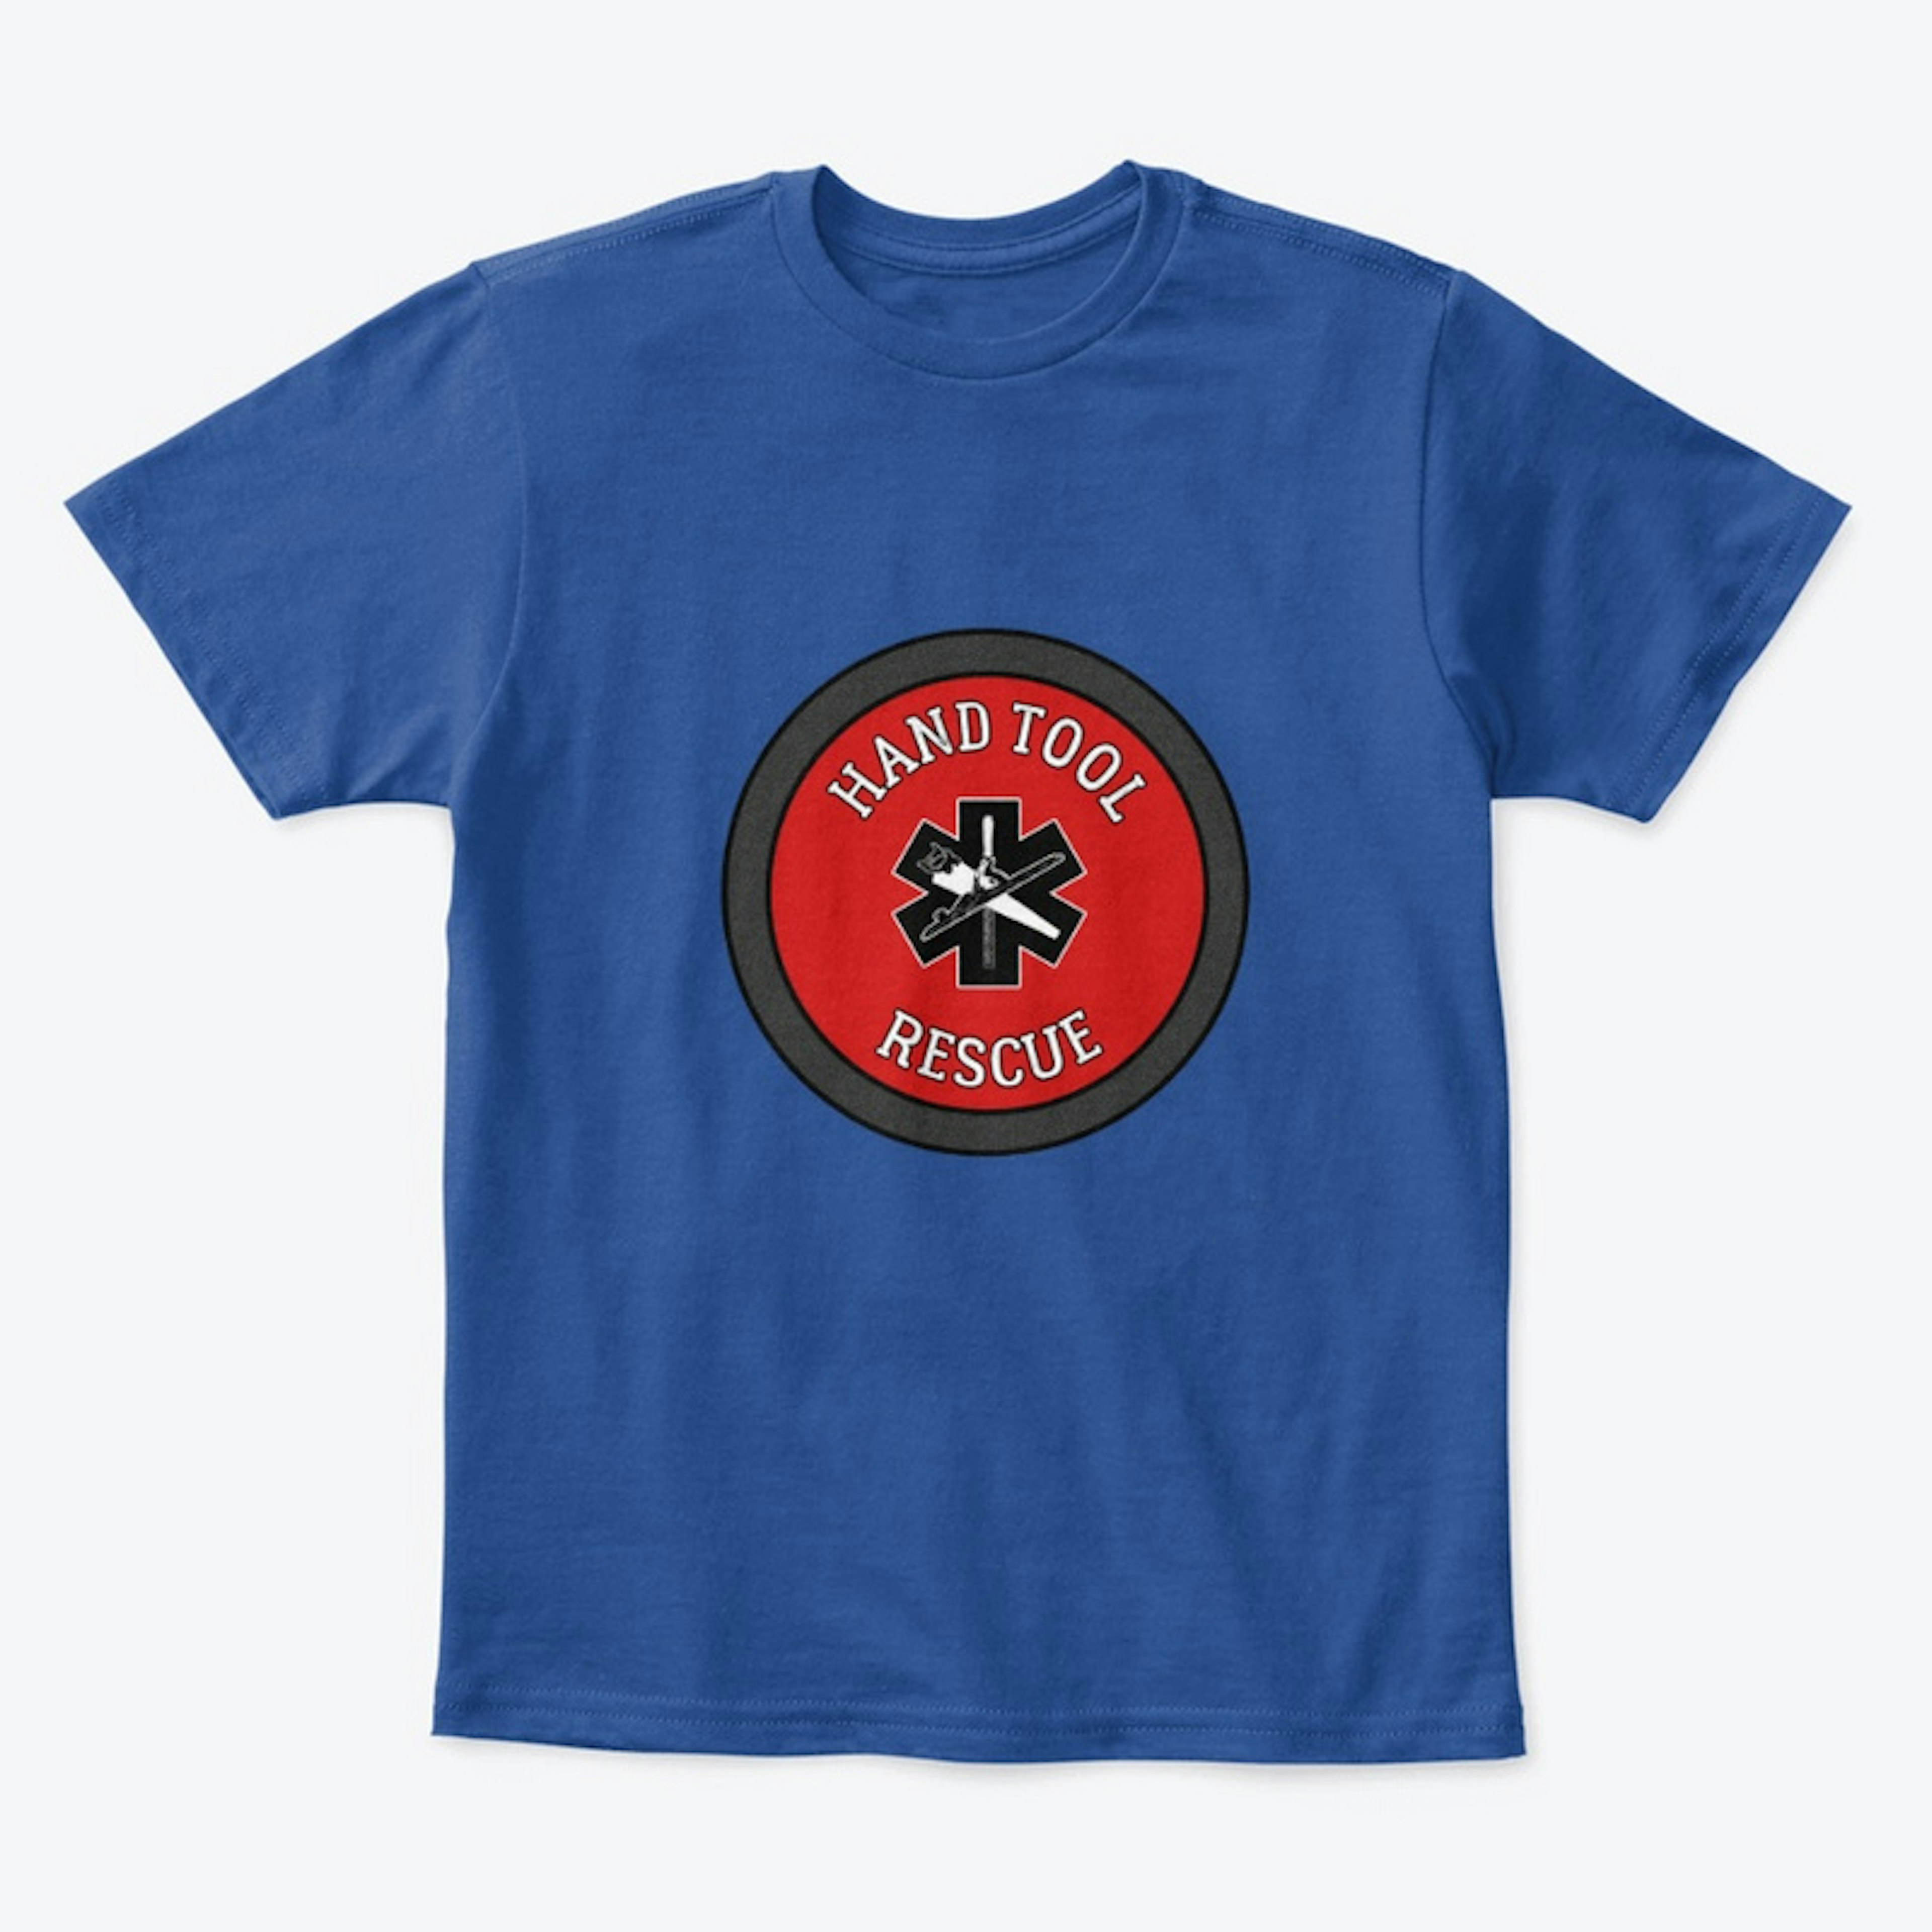 Kids - Hand Tool Rescue T-Shirt